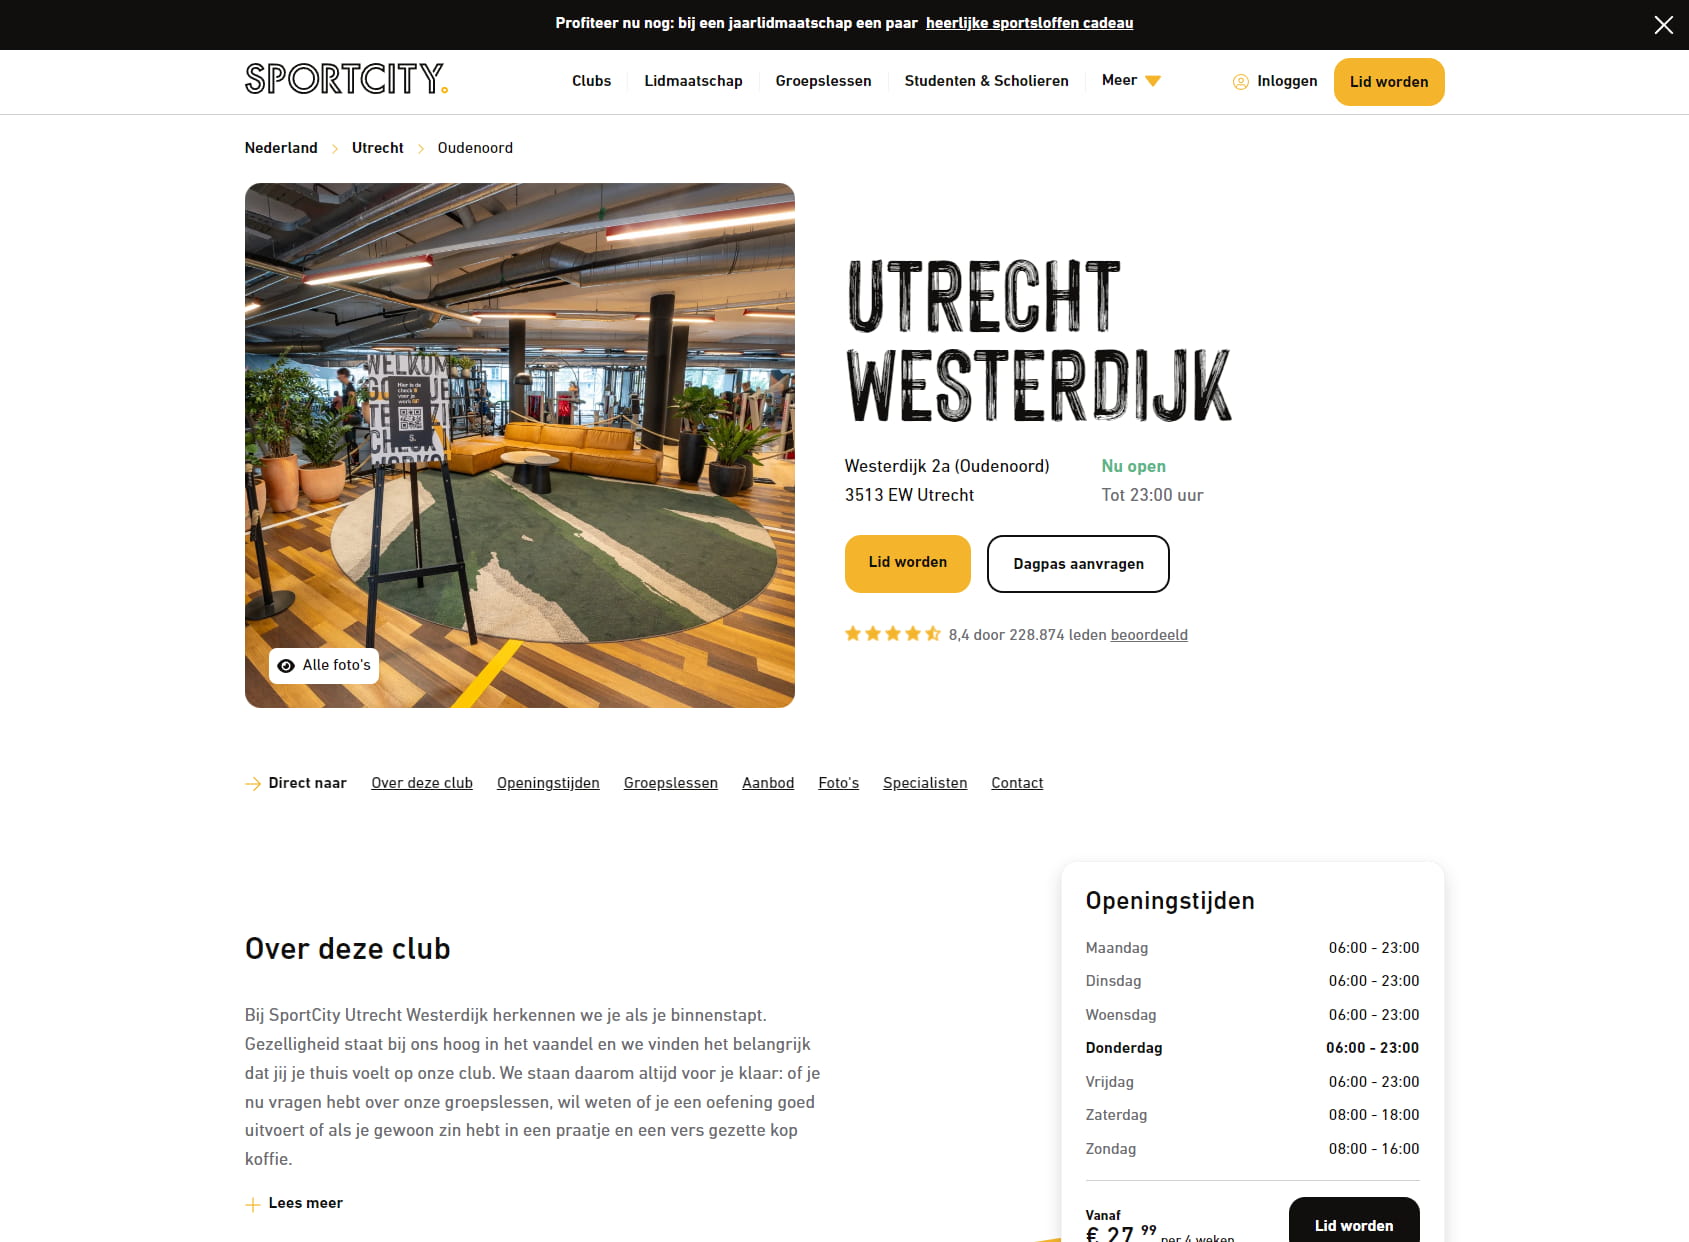 SportCity Utrecht Westerdijk